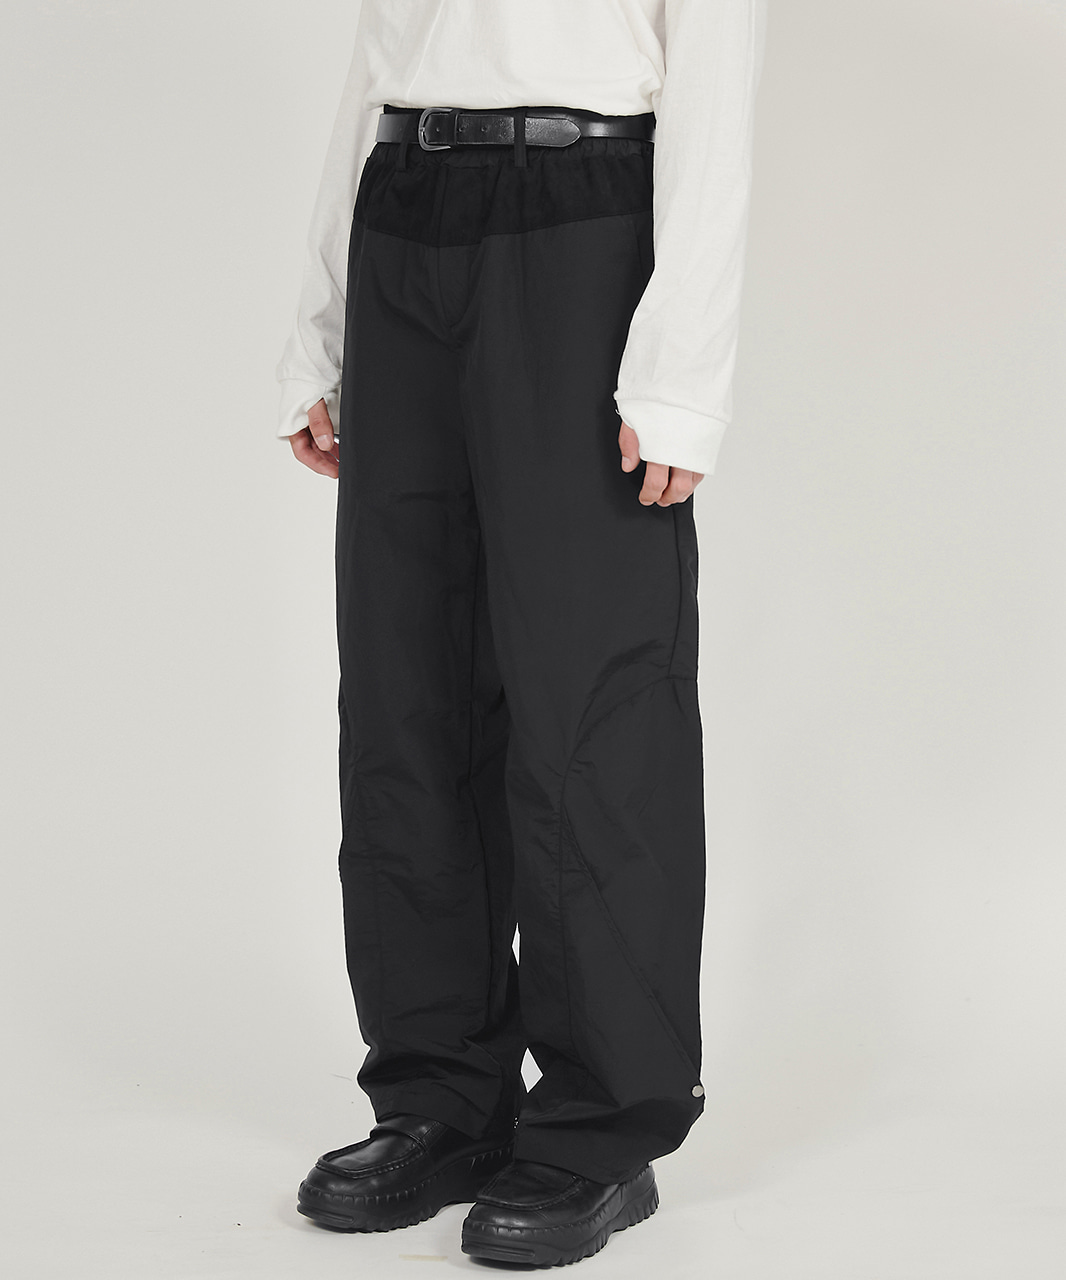 FLARE UP플레어업 Side Flap Pants - Black (FL-219)